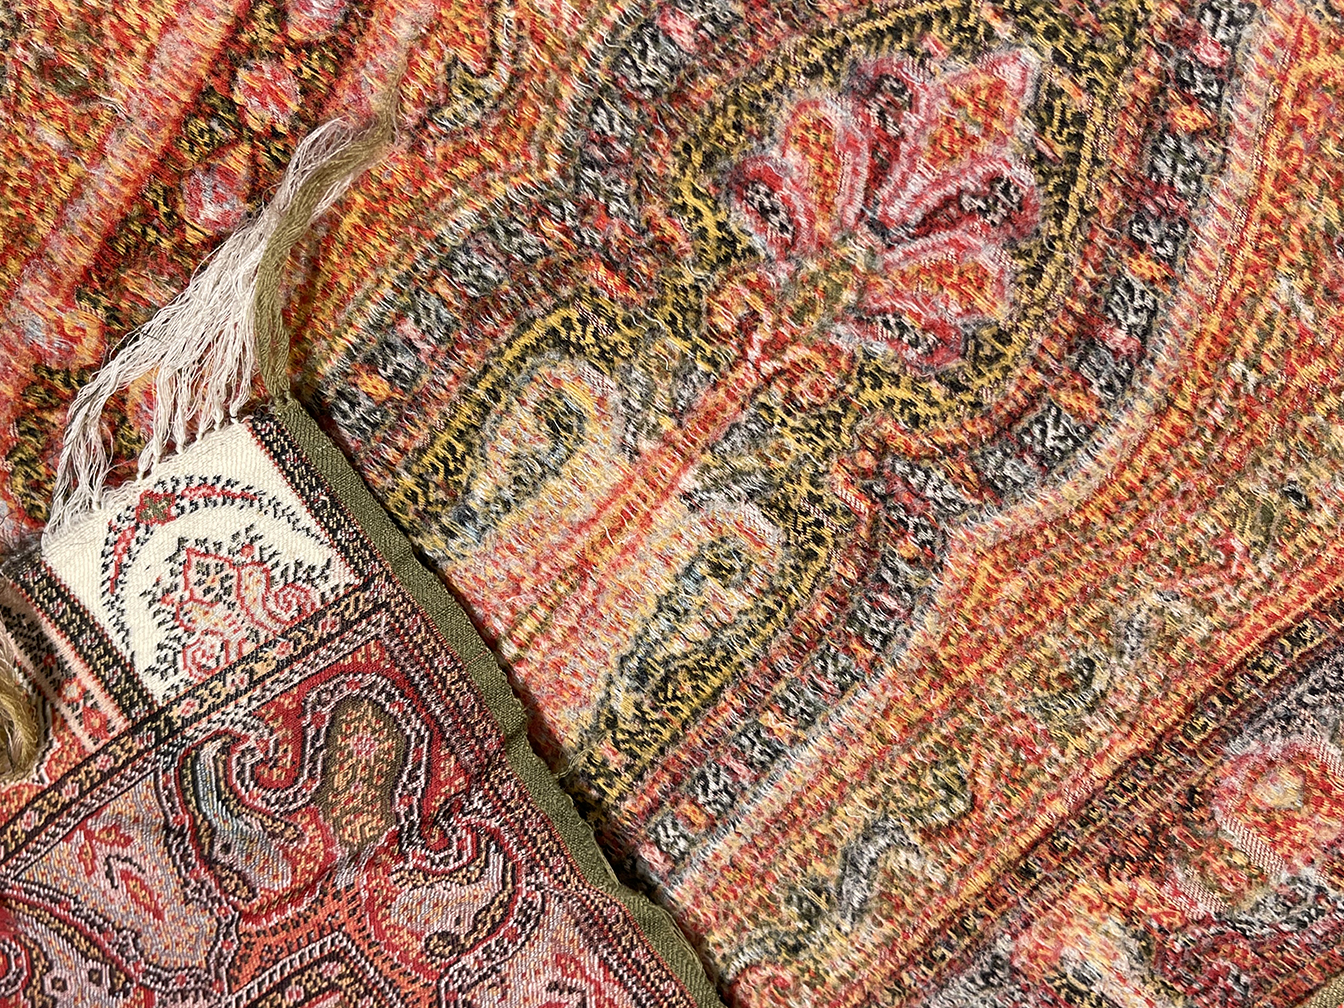 Antique paisley shawl - # 56491